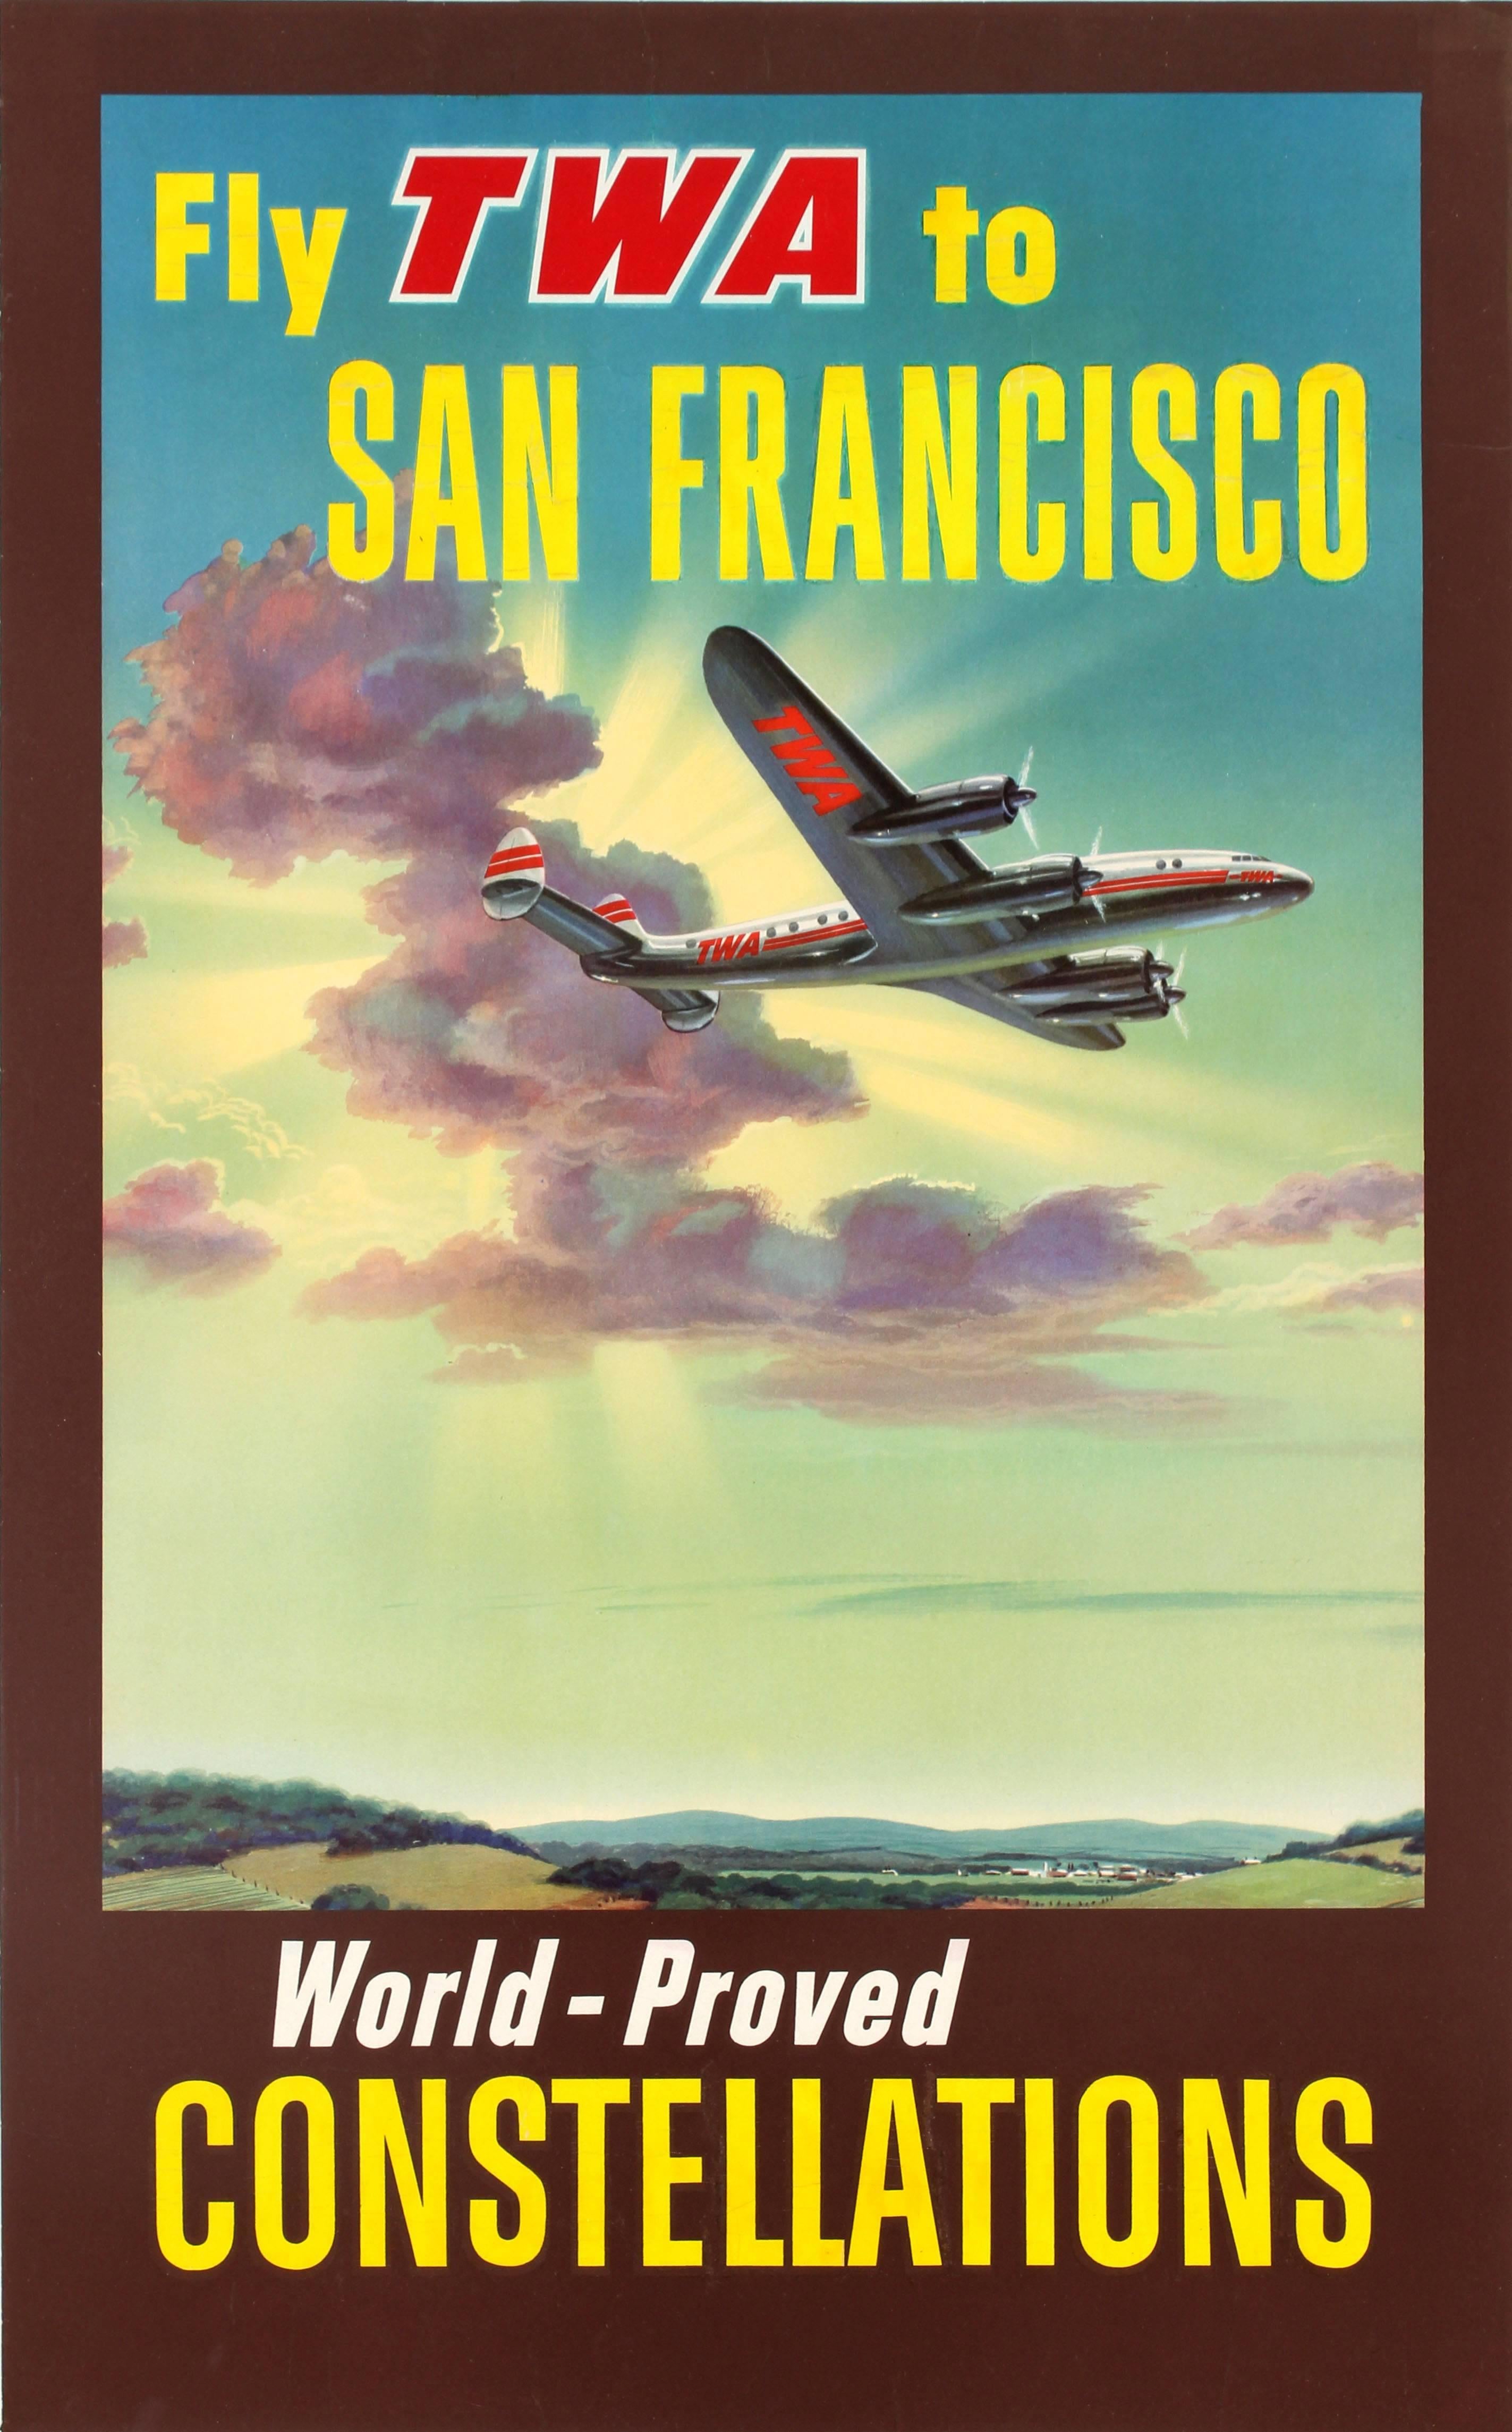 Fly TWA San Francisco California United States Travel Advertisement Art Poster 